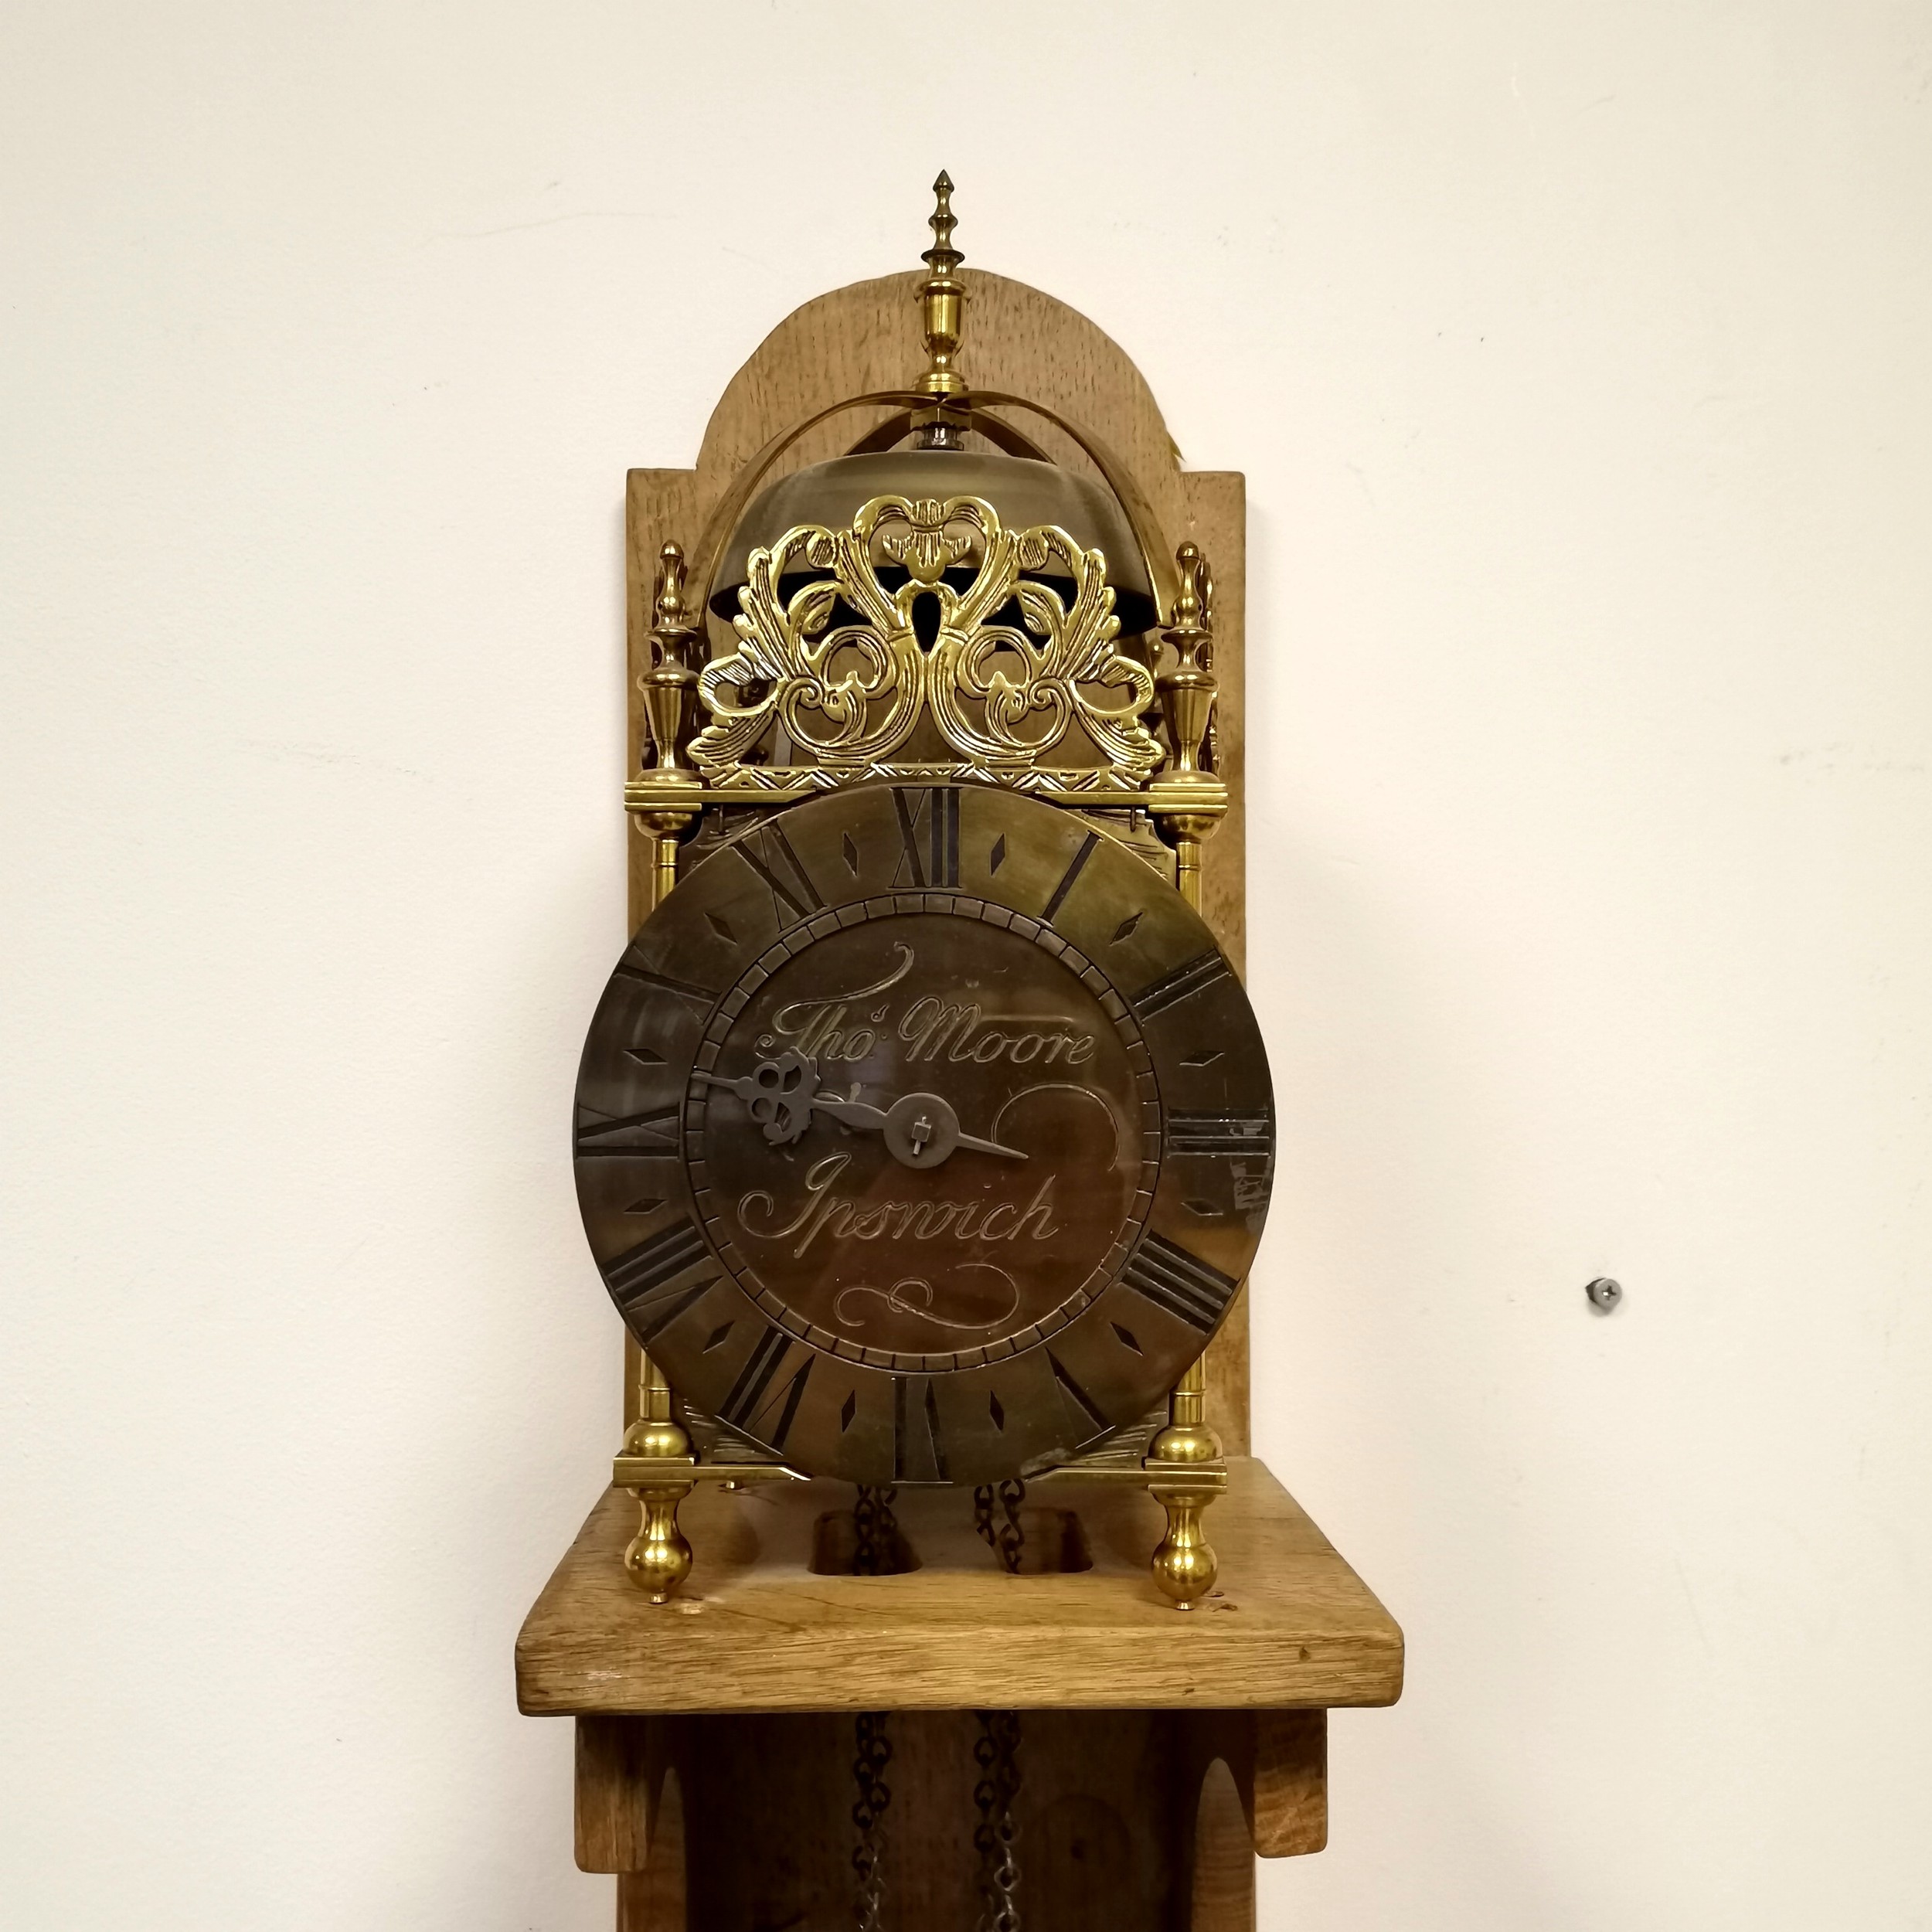 17th century style brass lantern bracket clock inscribed Thomas Moore, Ipswich on an oak wooden - Image 3 of 6